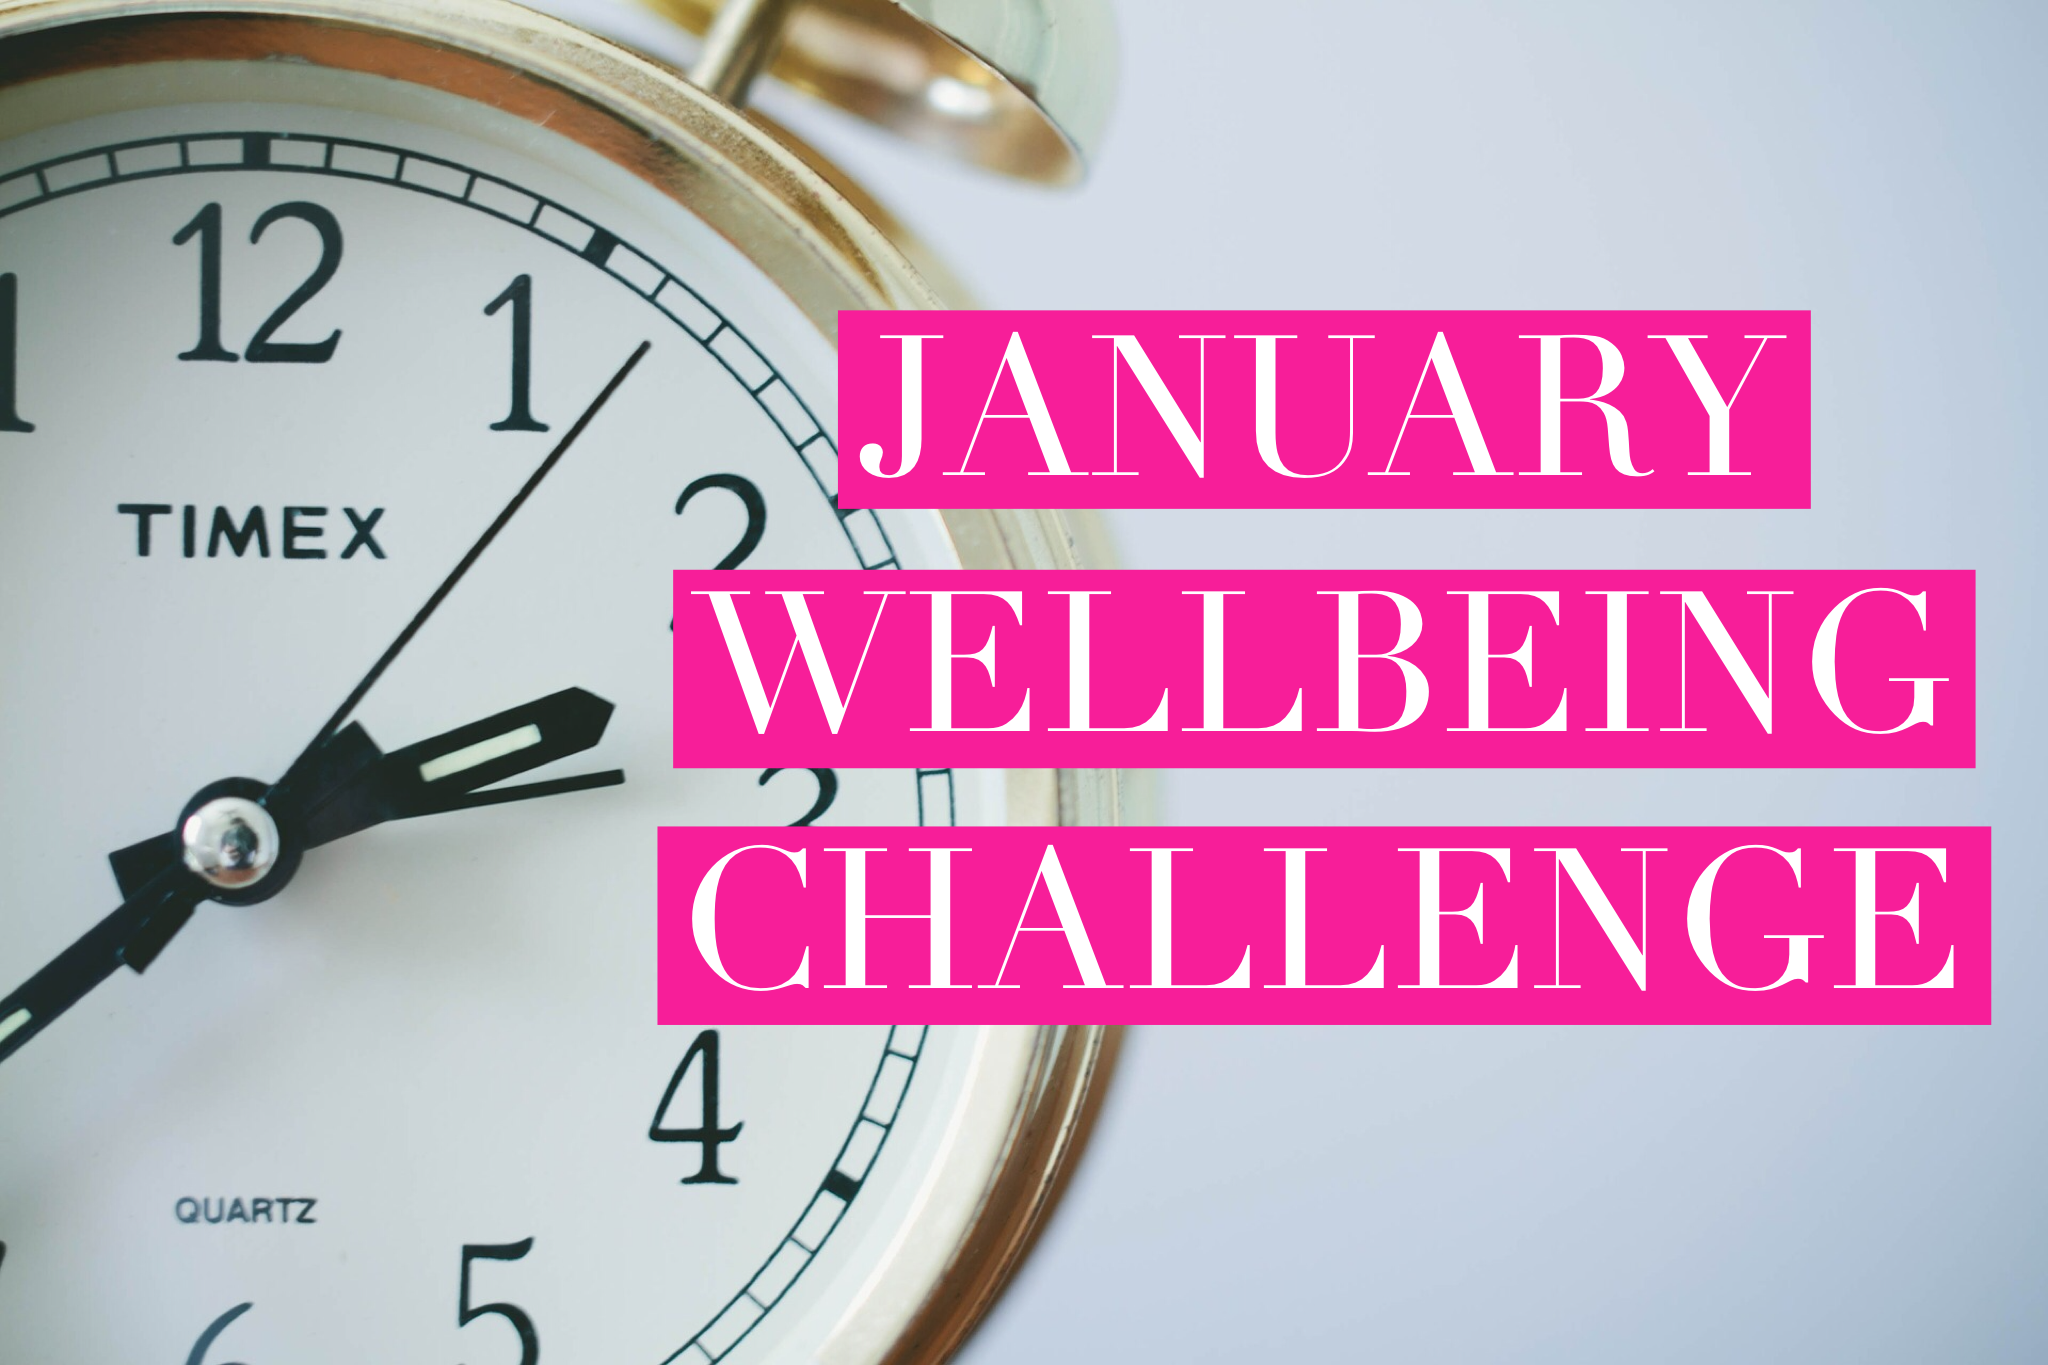 January Wellbeing Challenge 2018